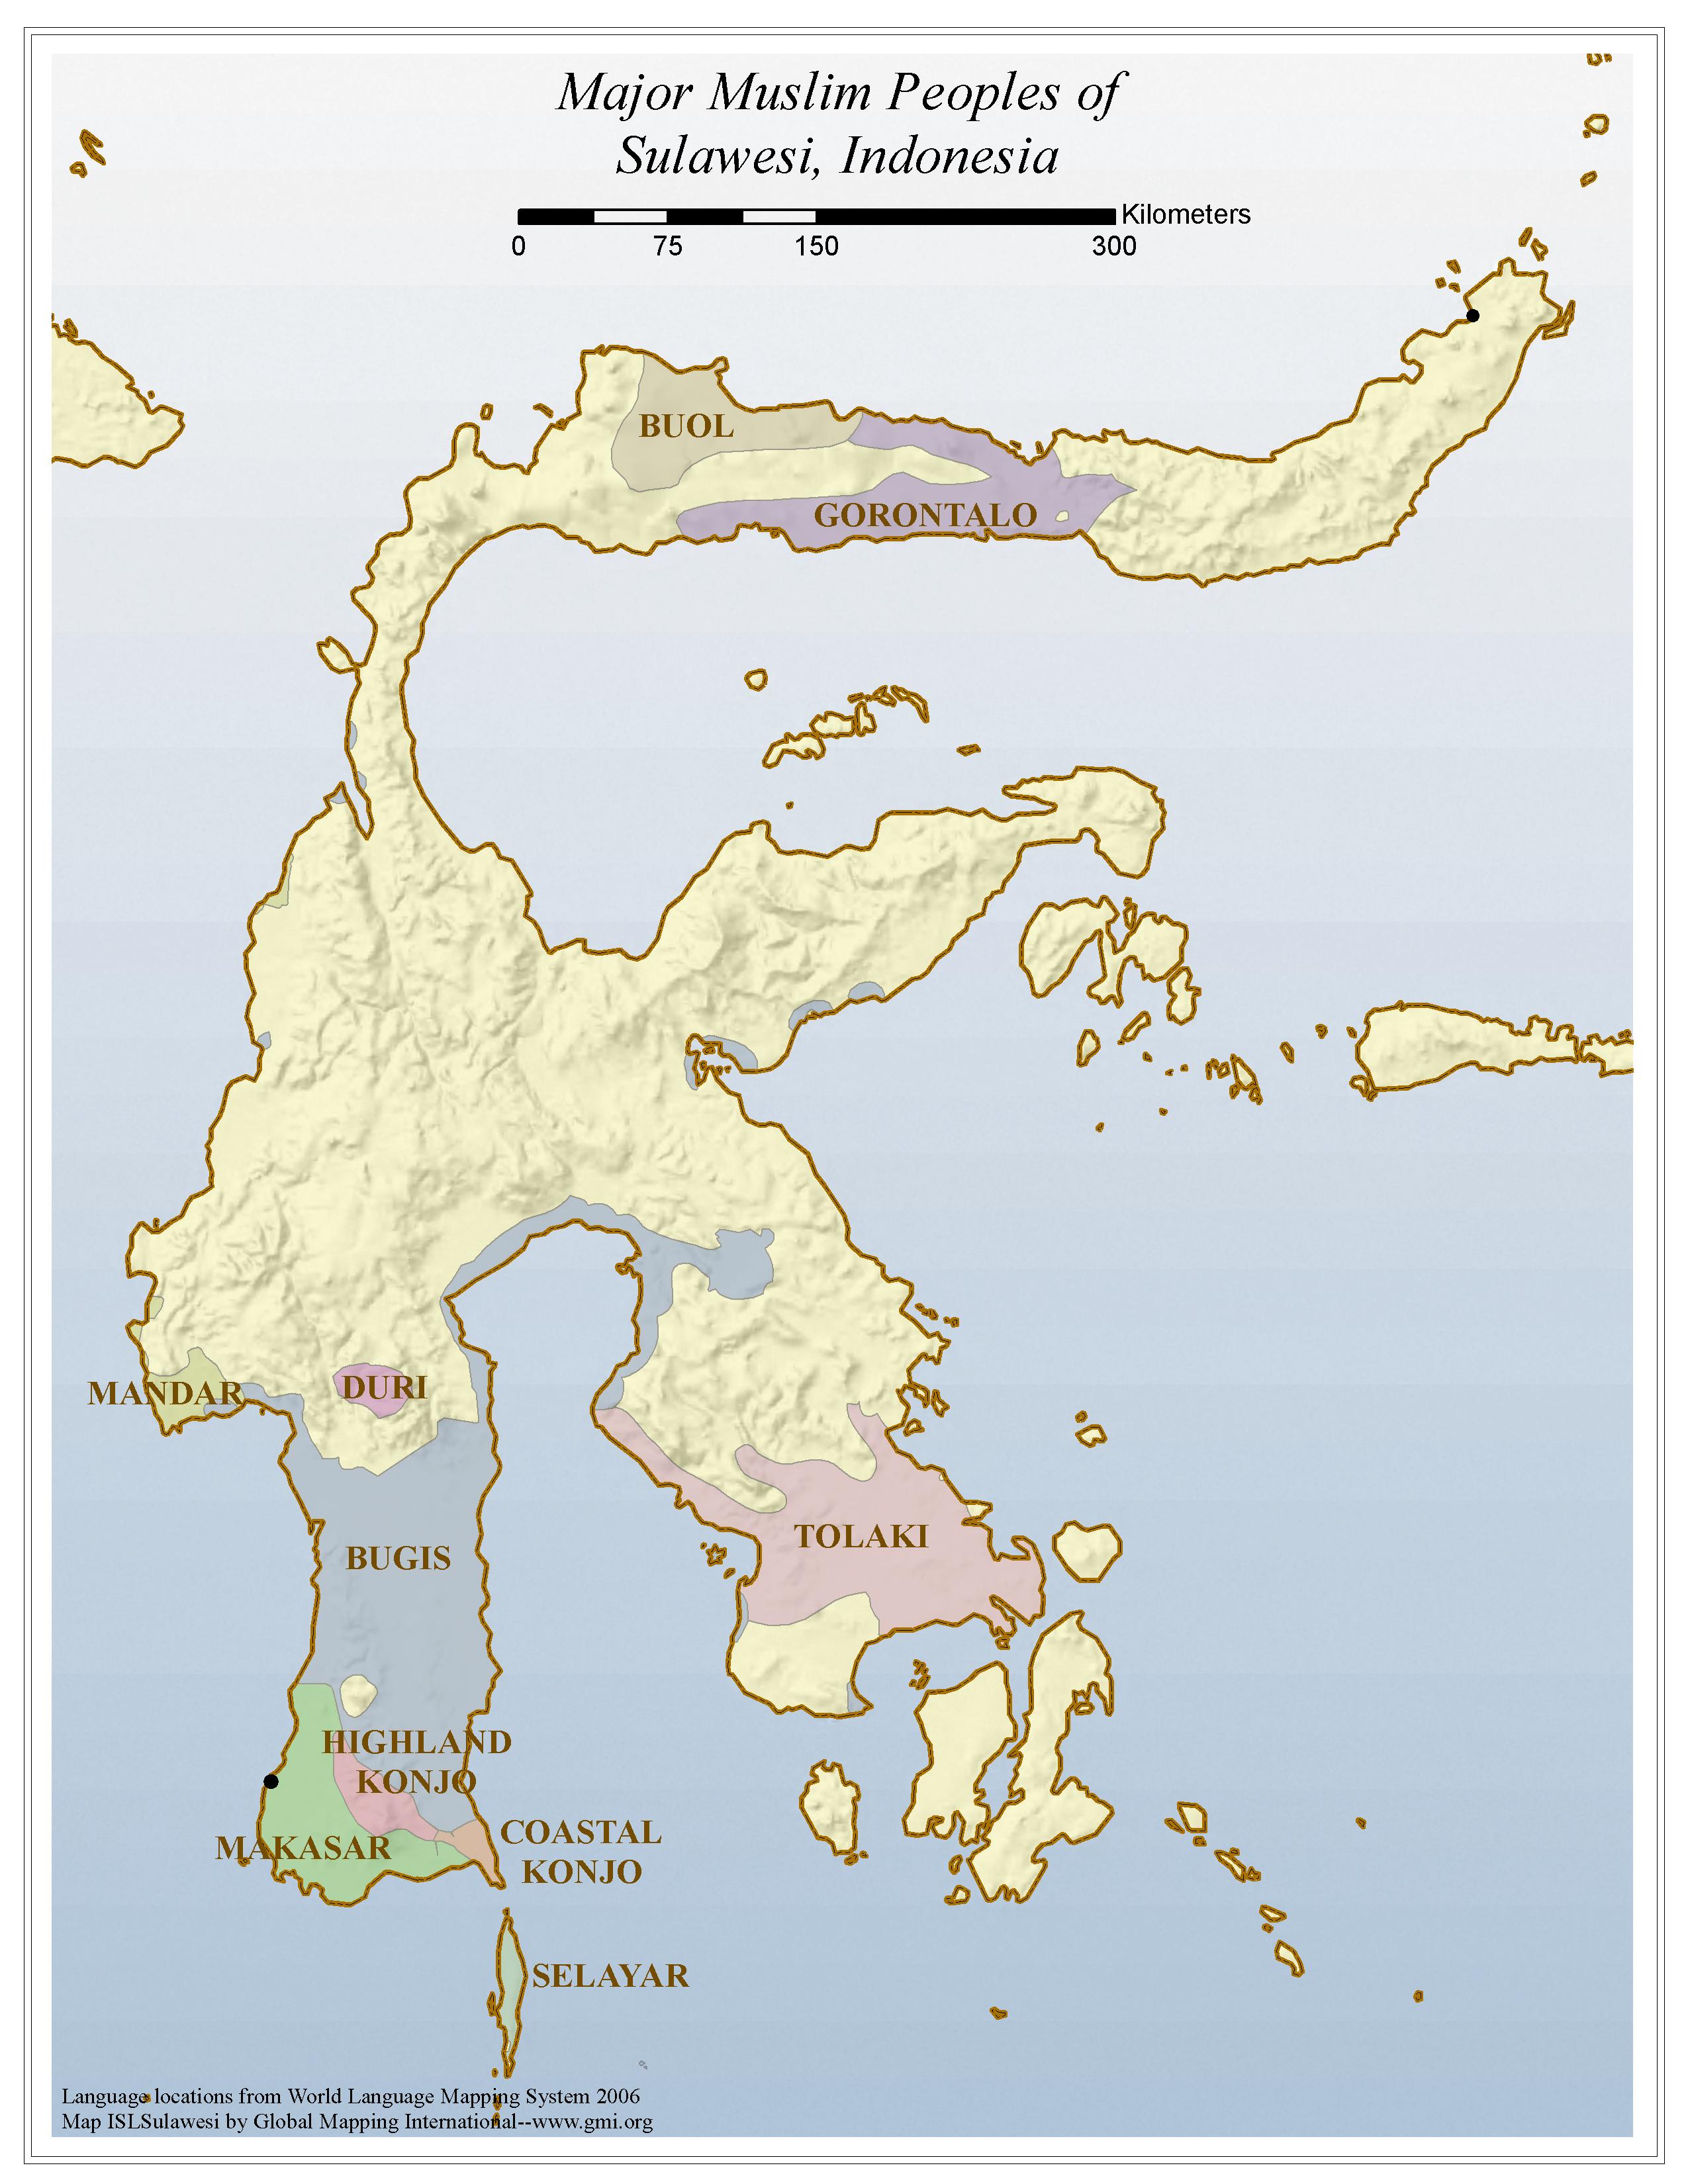 Major Muslim Peoples of Sulawesi, Indonesia